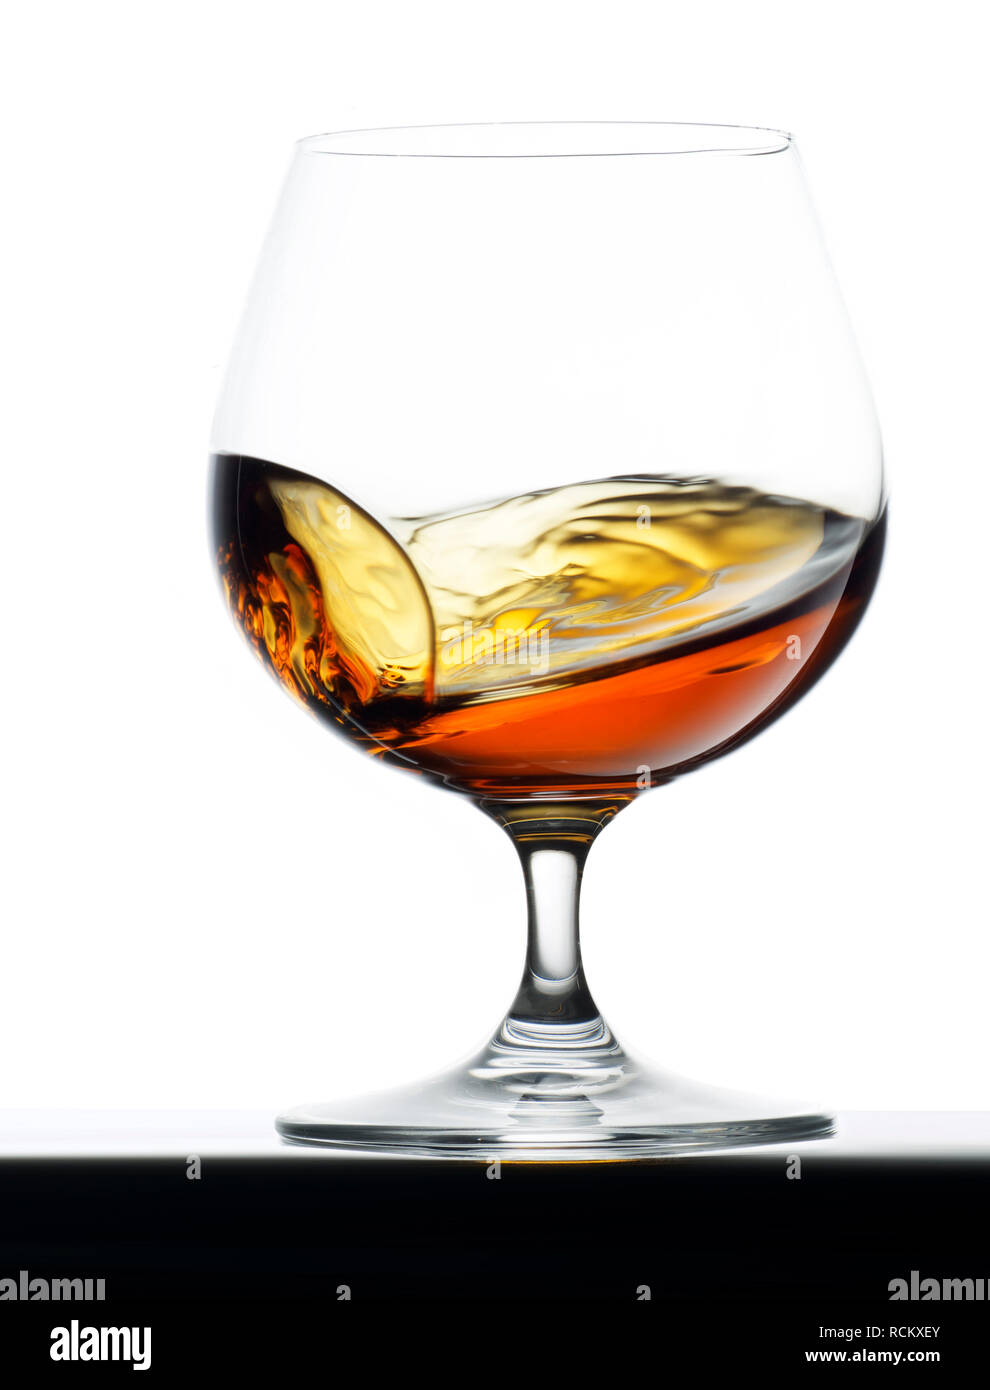 Copa de coñac brandy, iluminada desde atrás, fondo liso, longitud completa Foto de stock